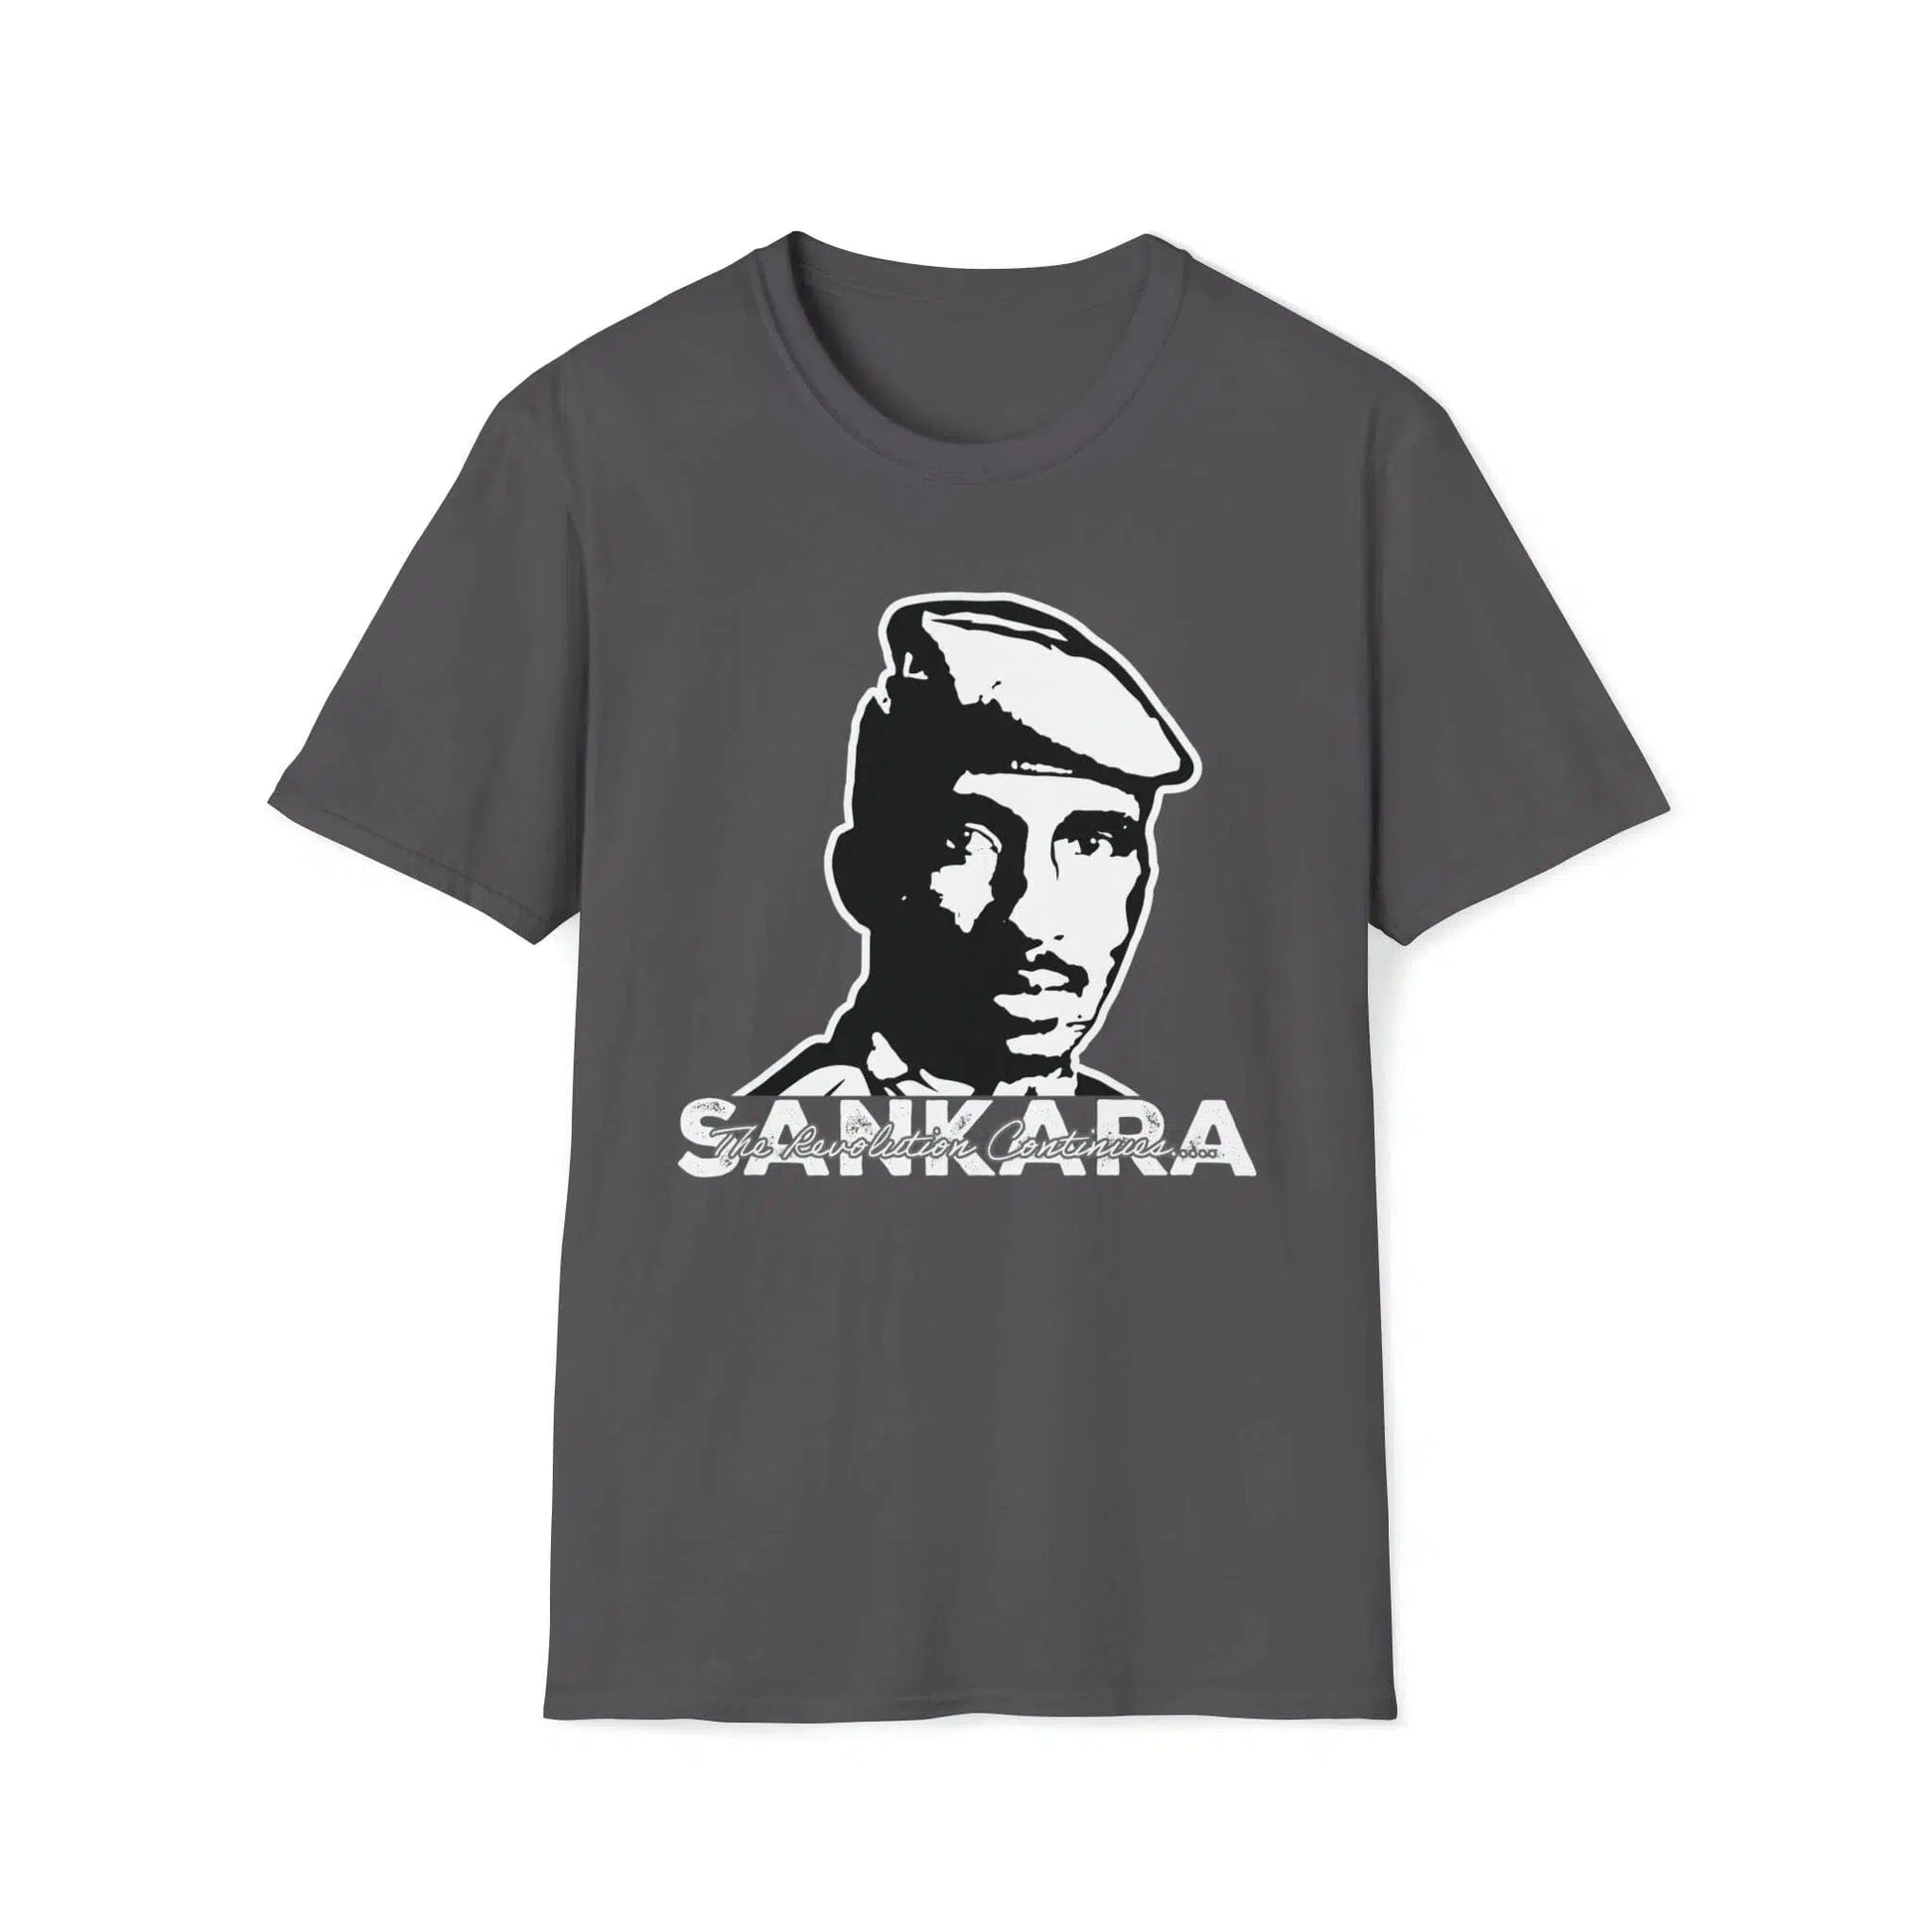 Thomas Sankara shirt: Celebrating a Great Pan African Icon